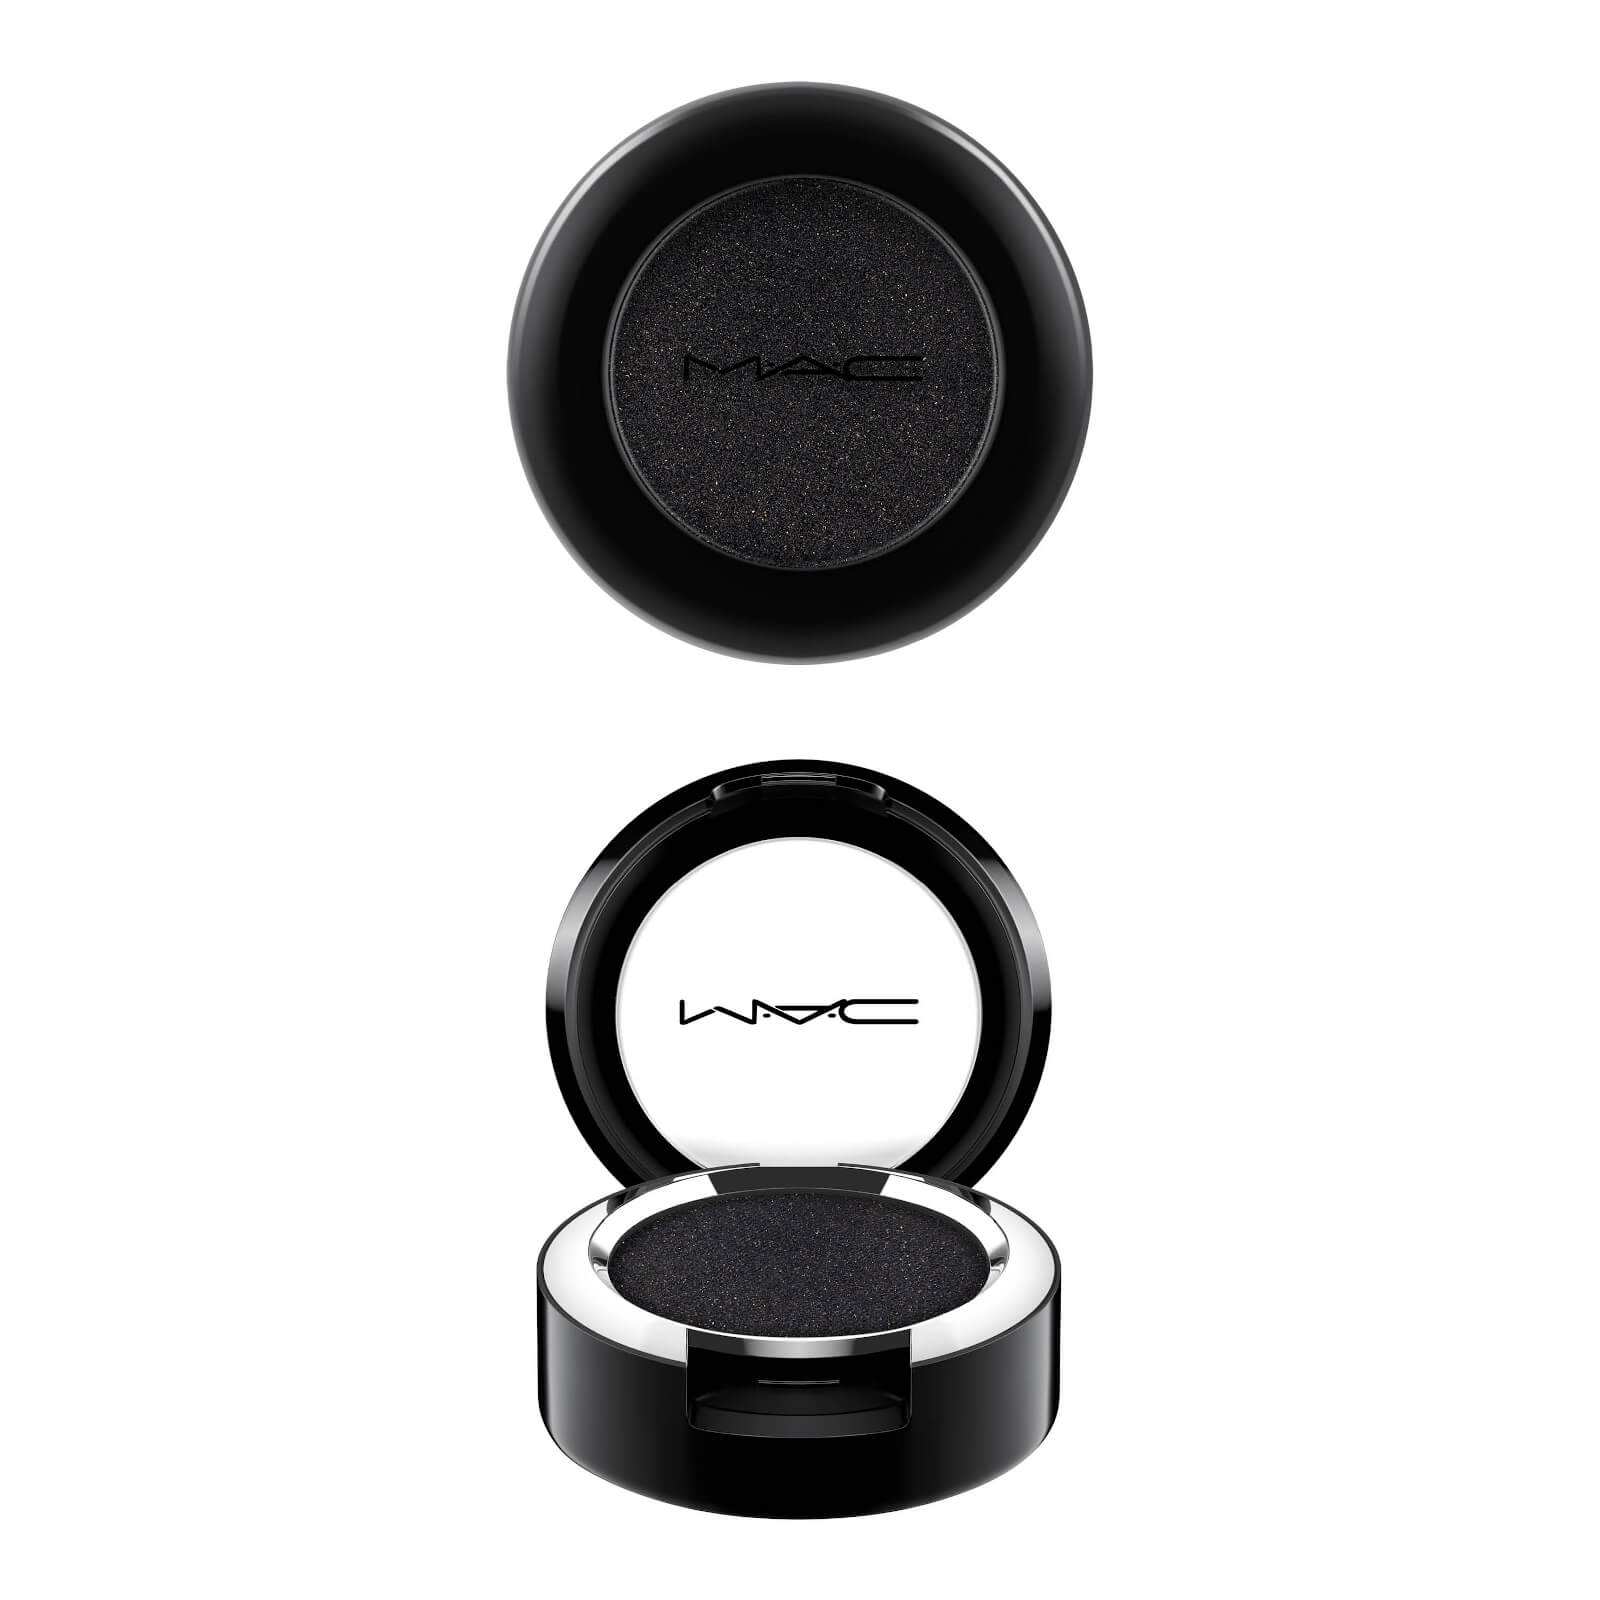 Mac Dazzleshadow Extreme Small Eye Shadow 1.5G (Various Shades) - Illuminaughty